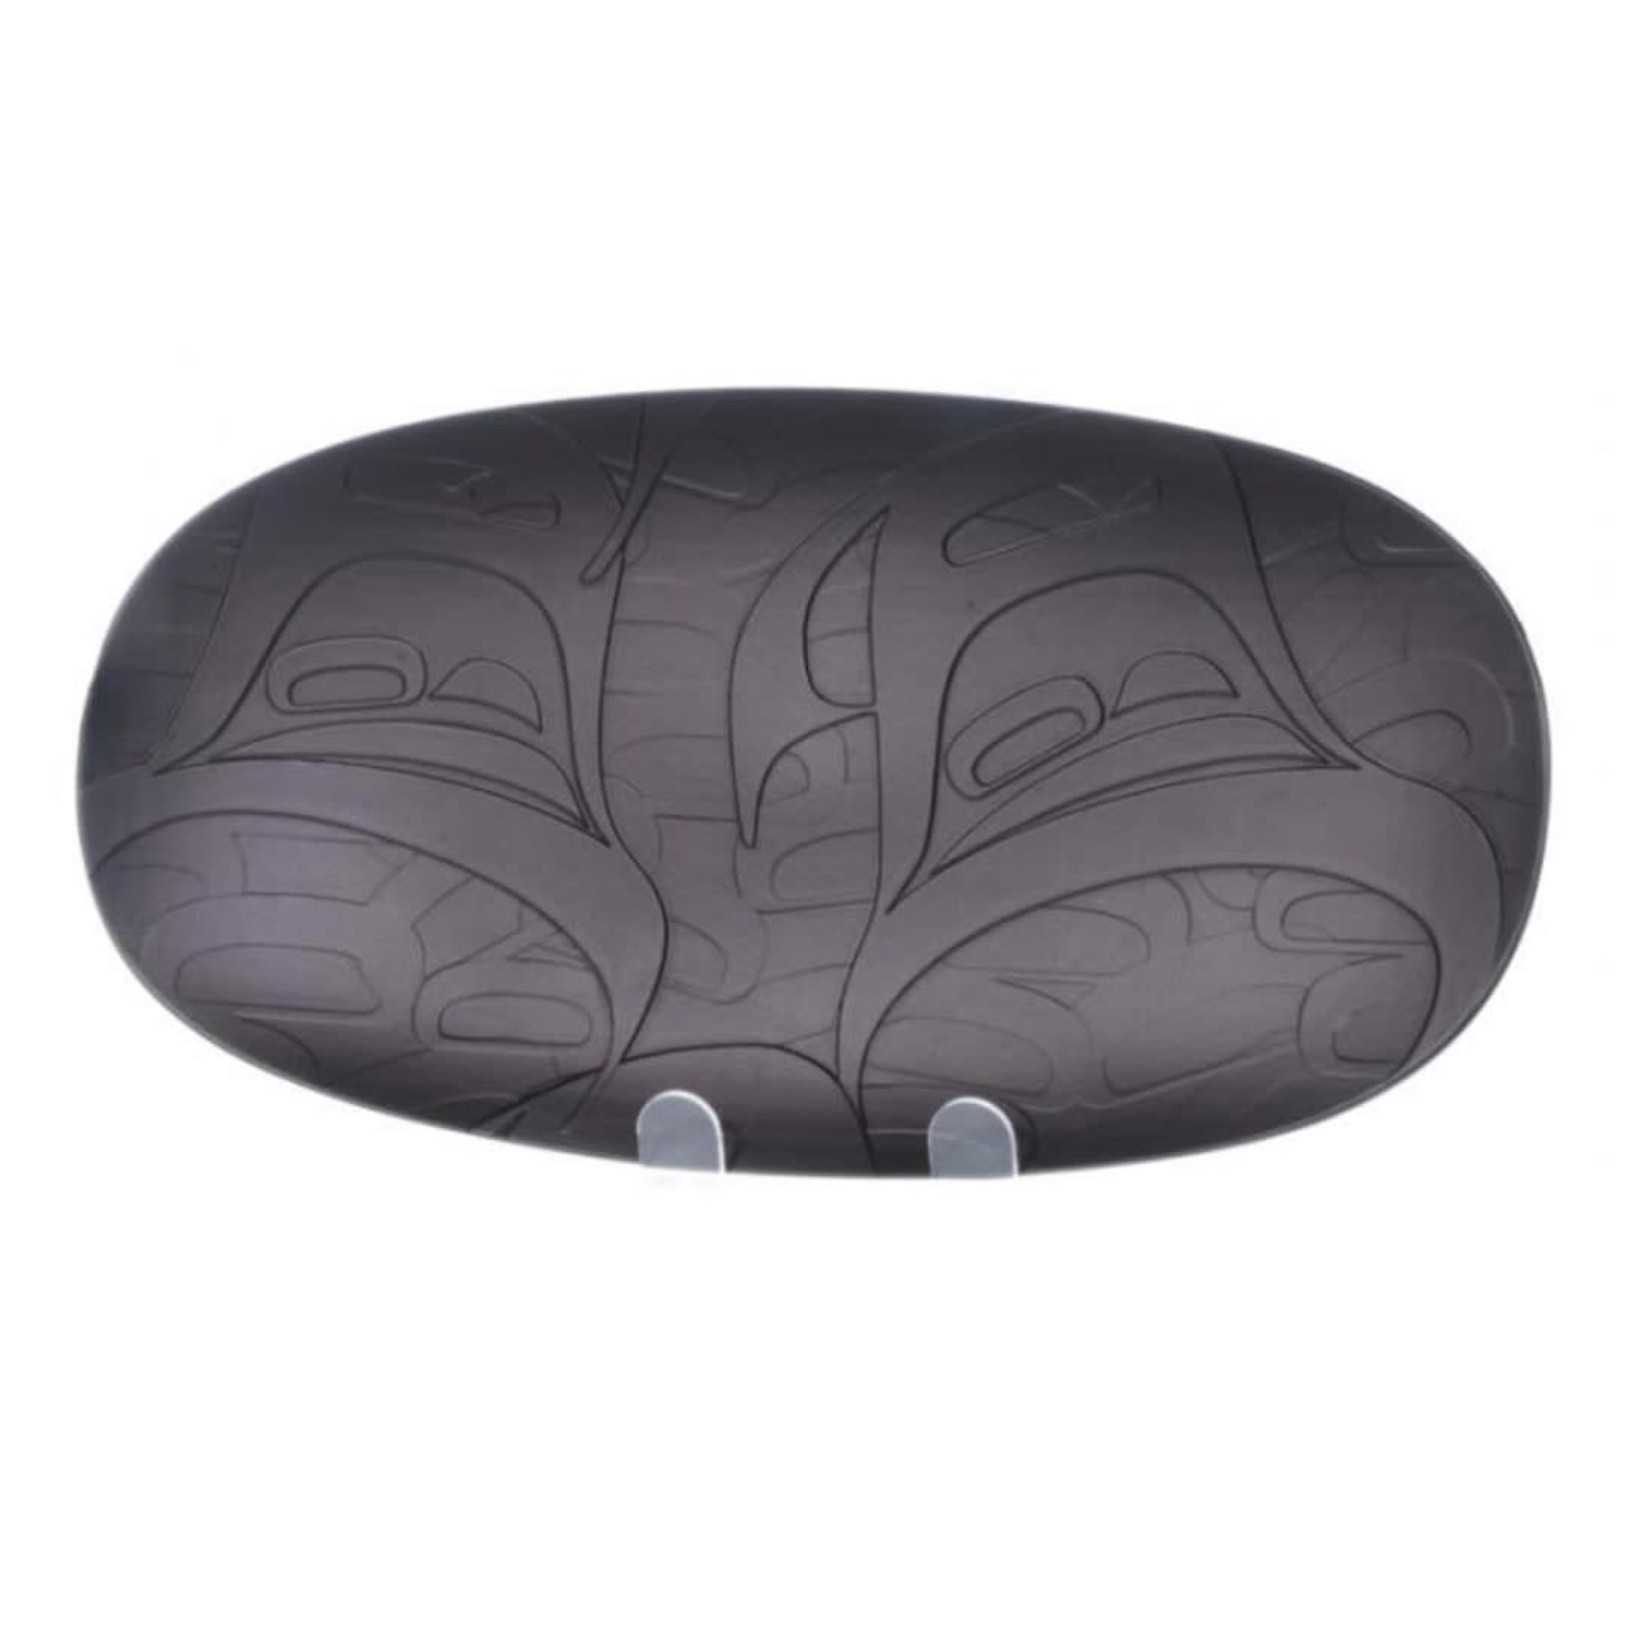 PANABO CORRINE HUNT Platter Medium - Charcoal